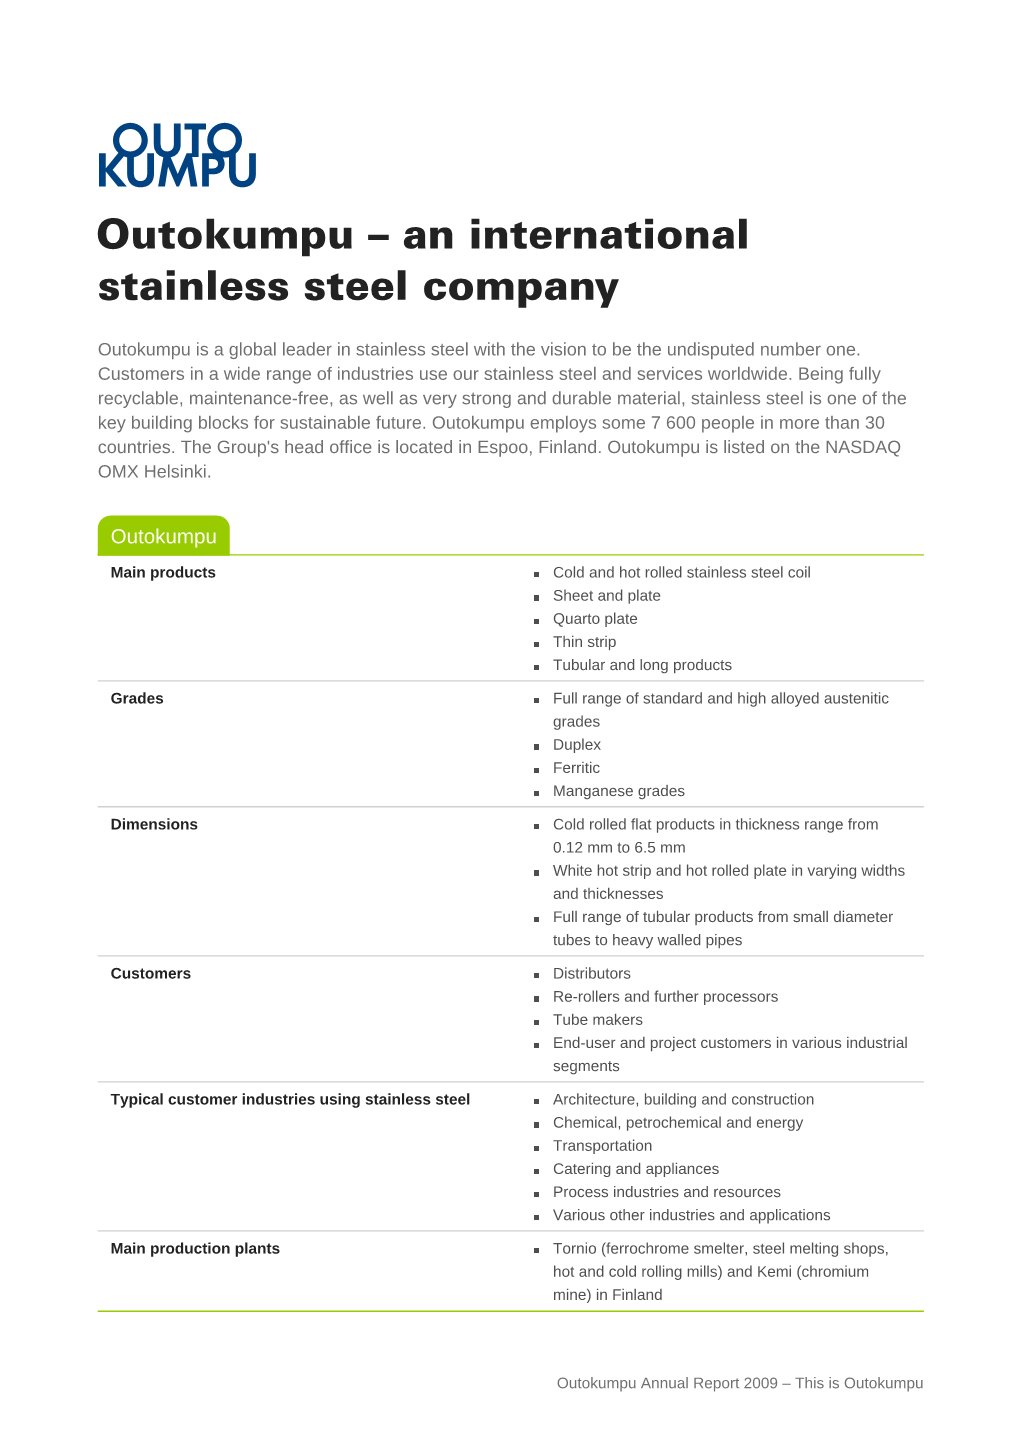 Outokumpu – an International Stainless Steel Company